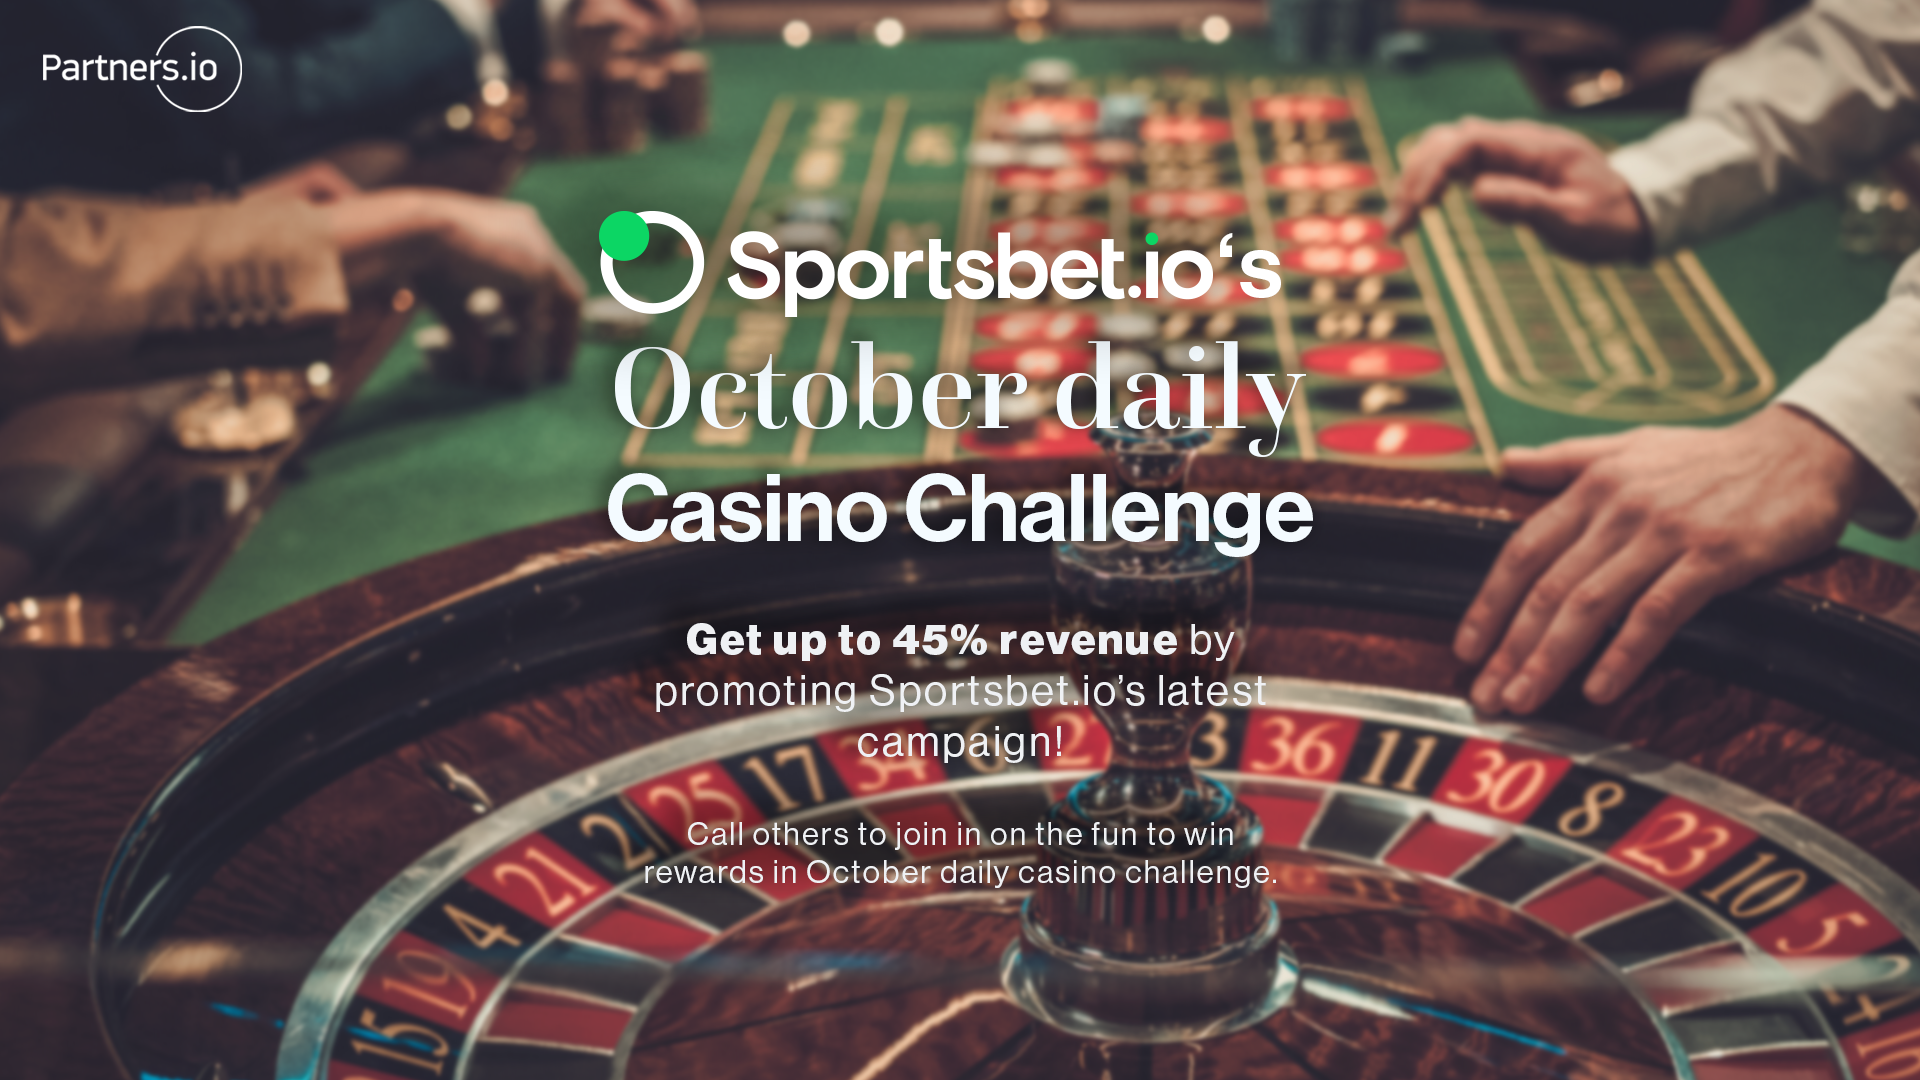 Sportsbet.io’s October daily casino challenge